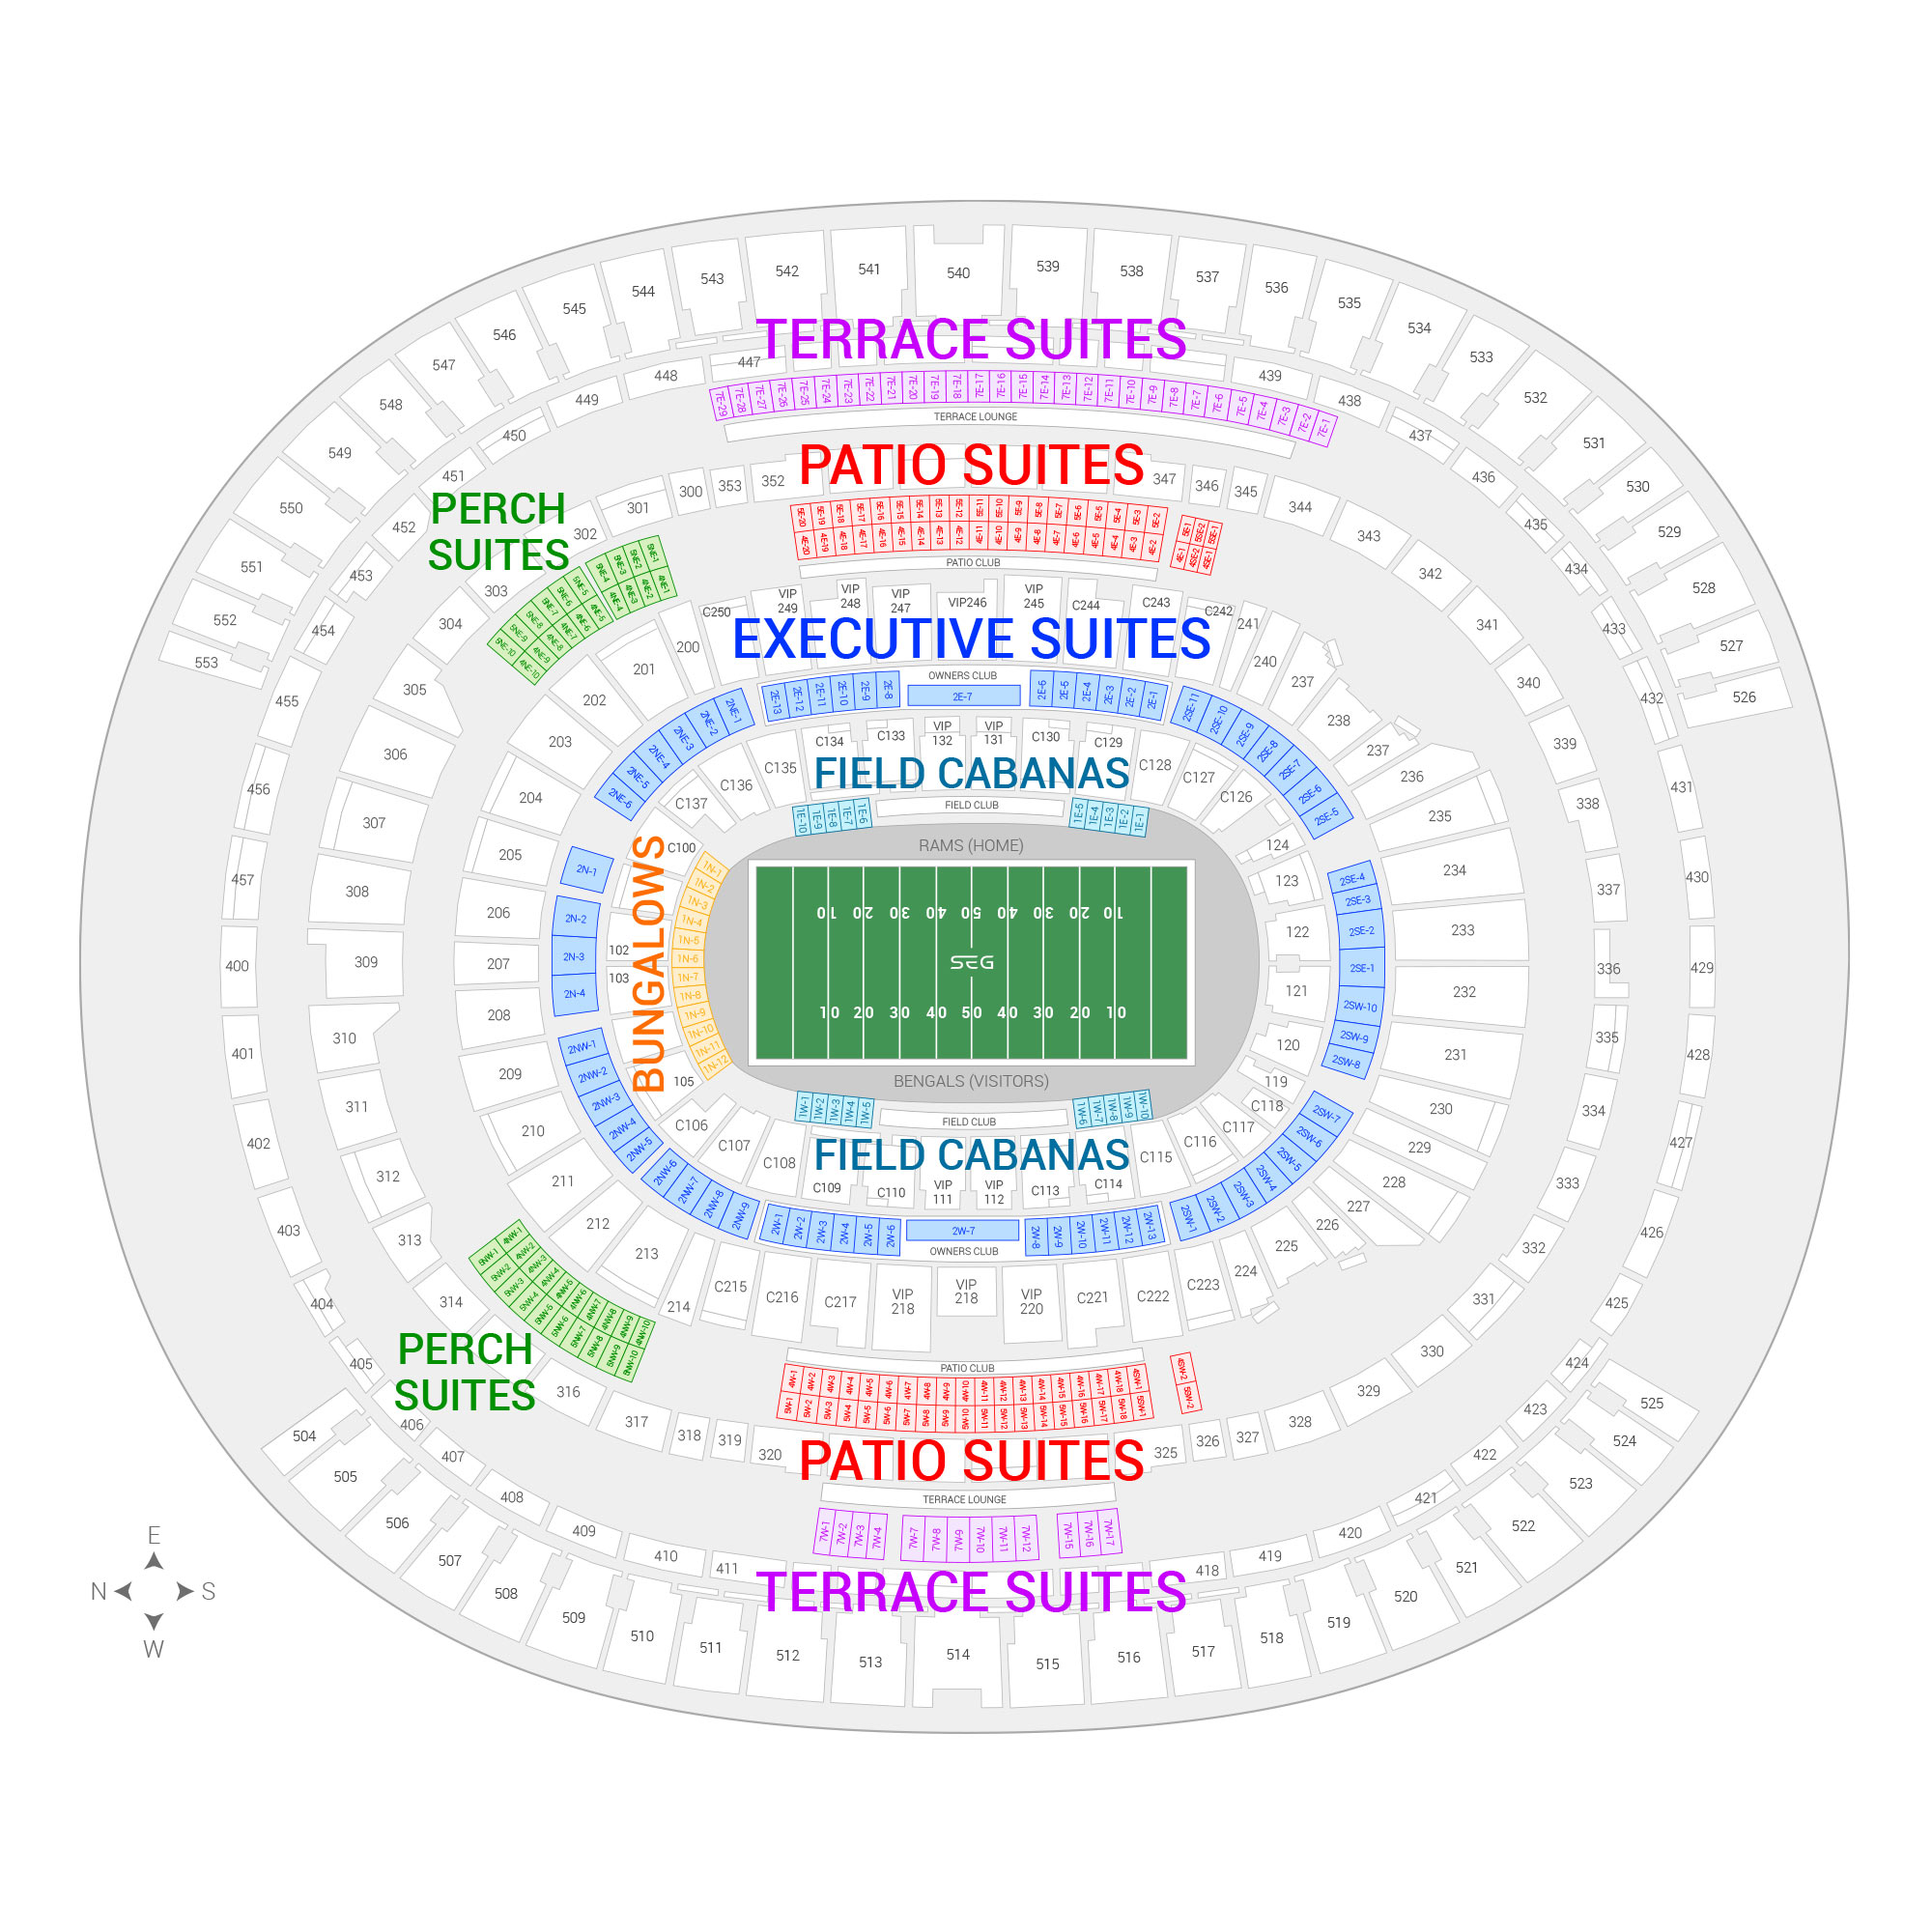 SoFi Stadium / Super Bowl LVI Suite Map and Seating Chart